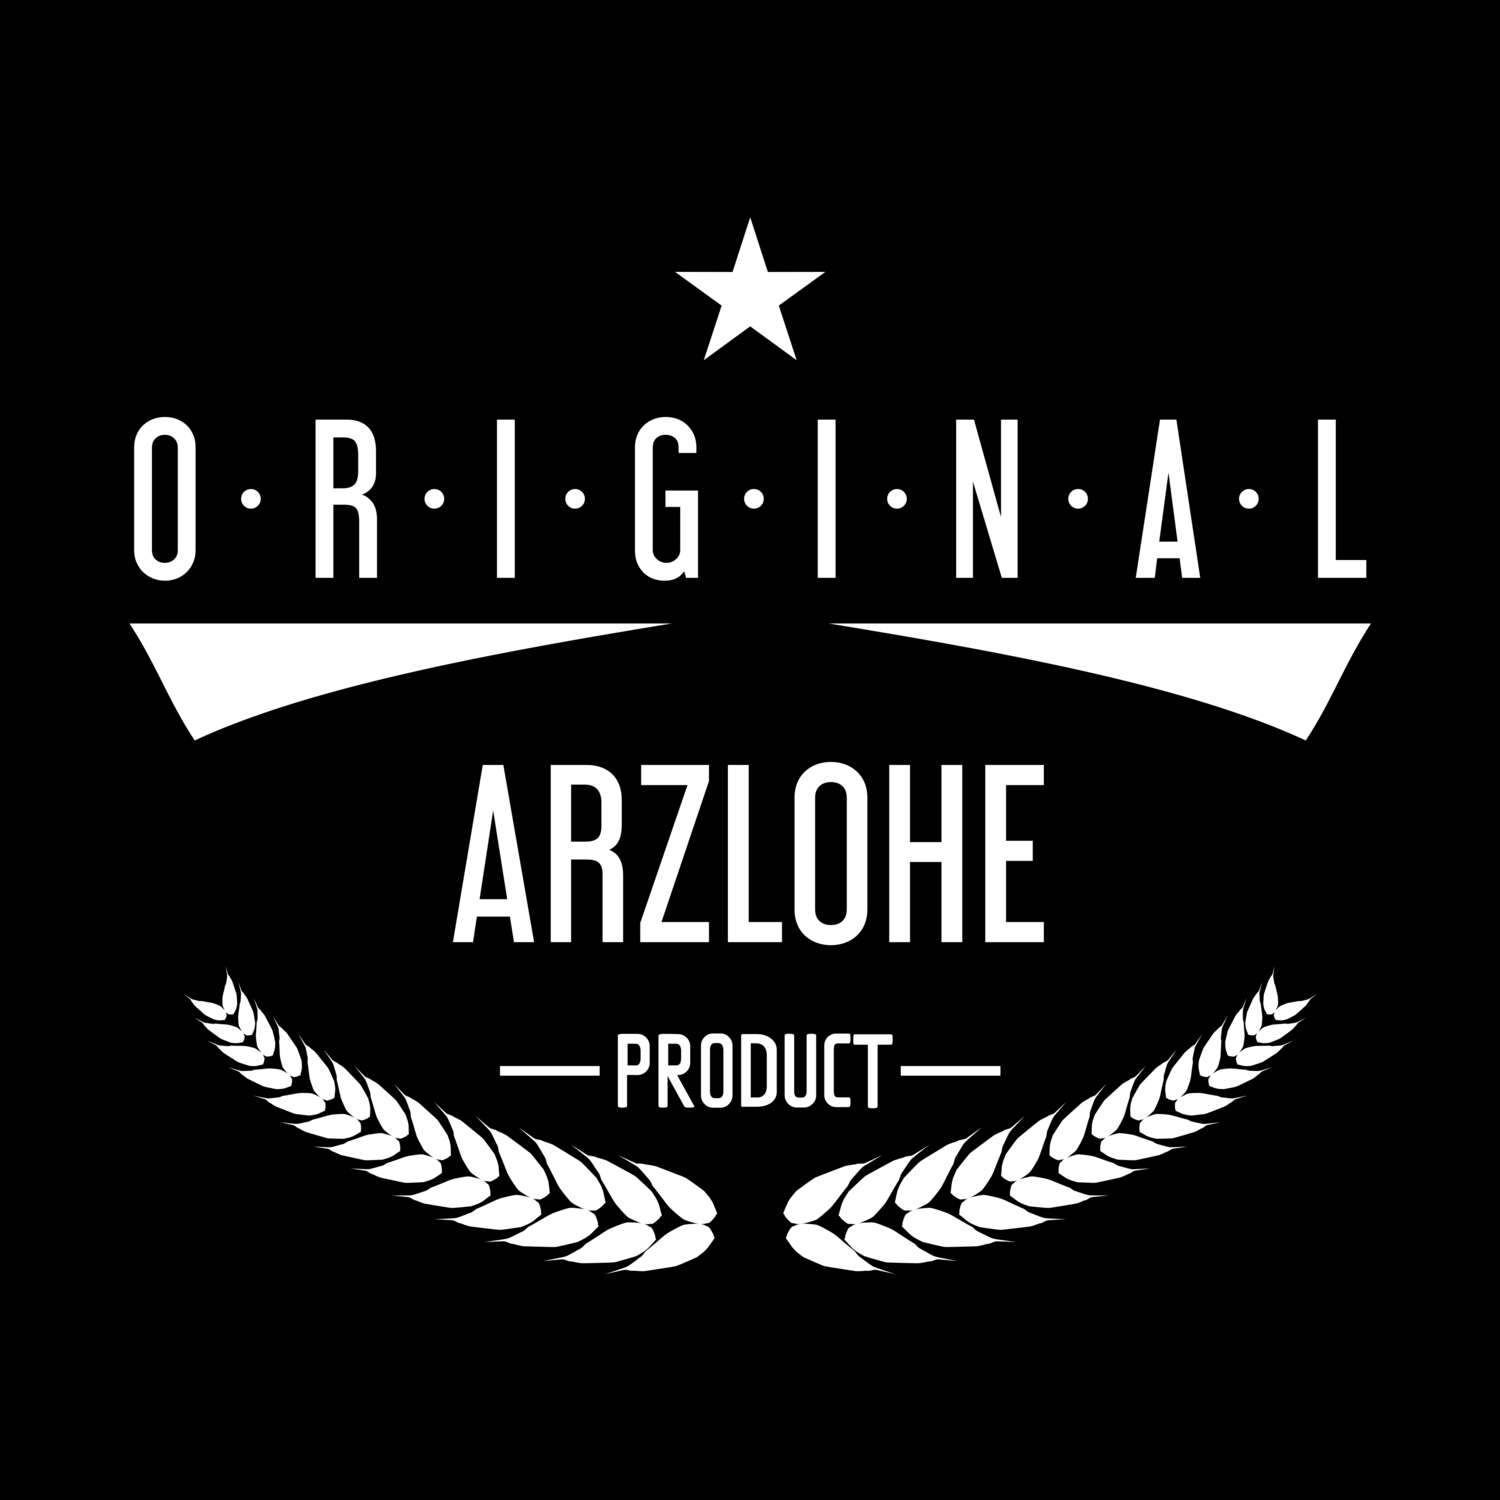 Arzlohe T-Shirt »Original Product«